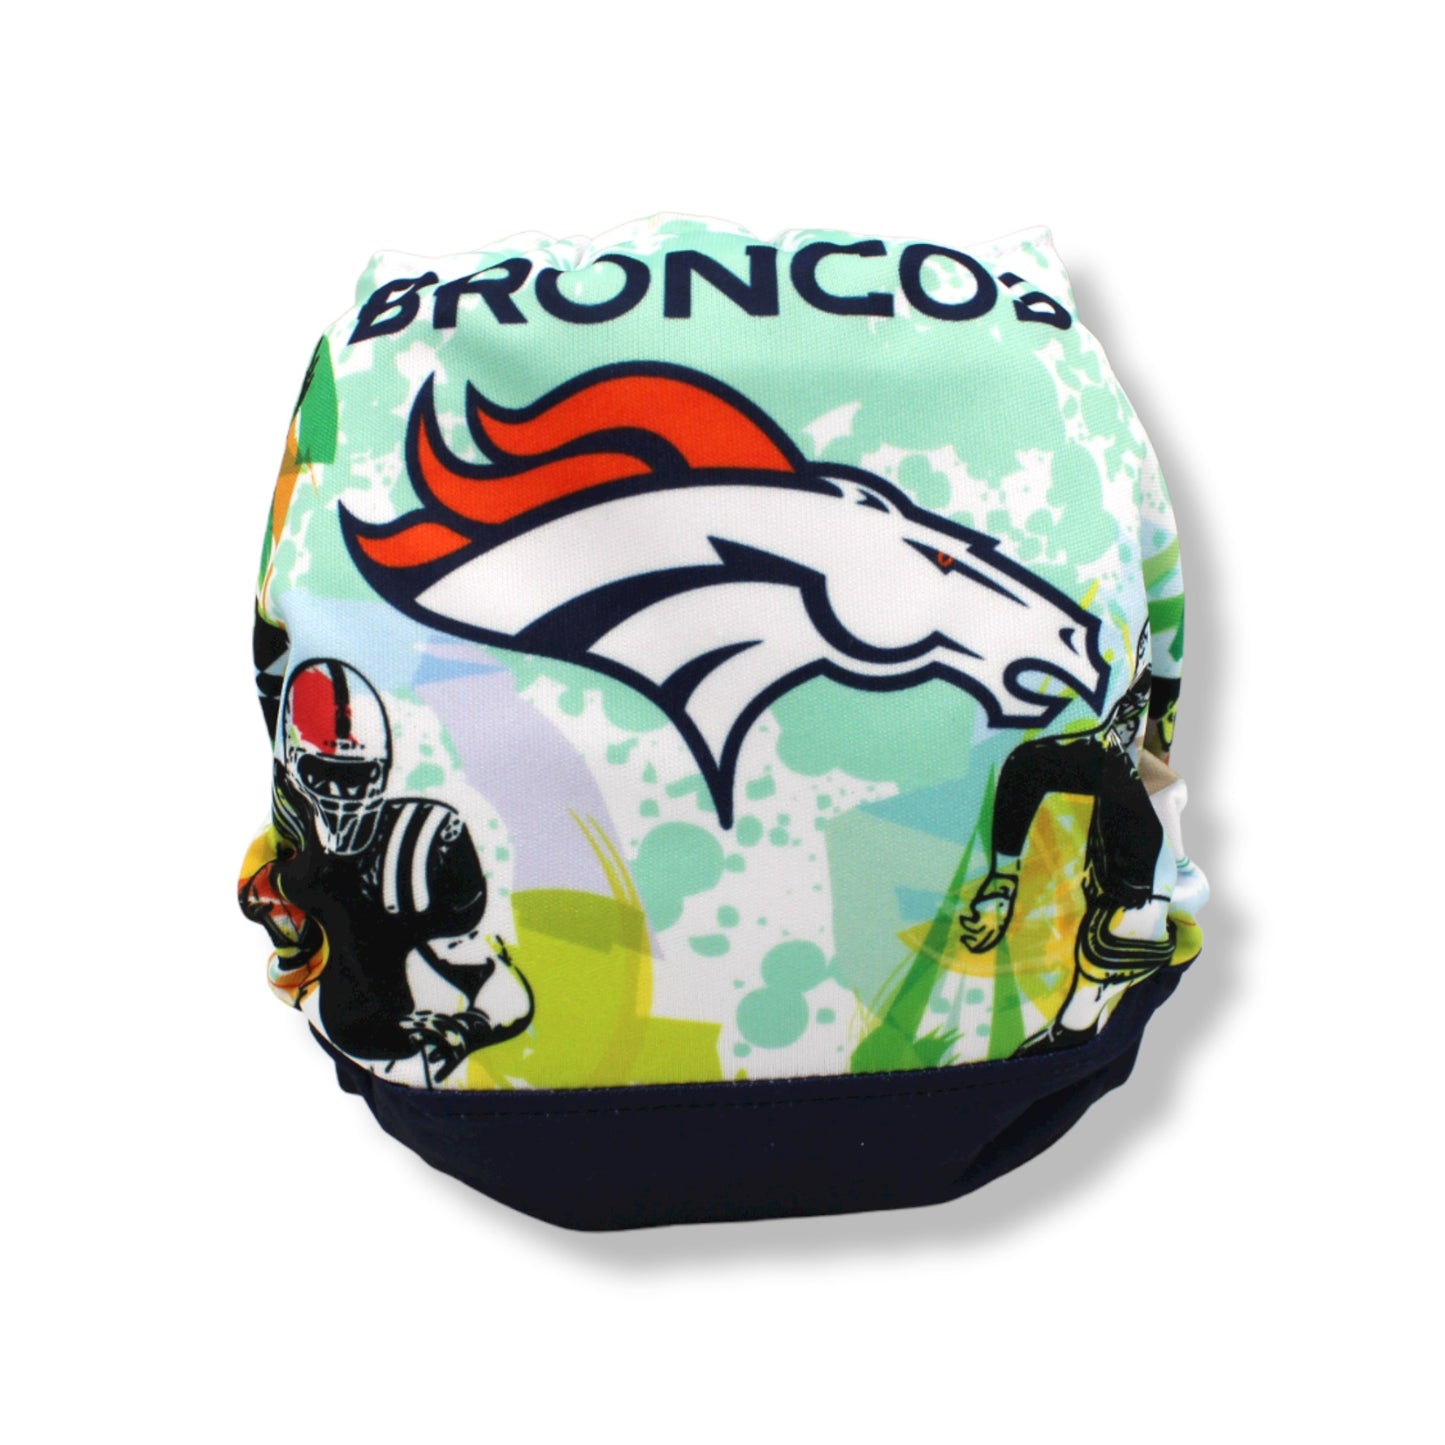 Couches - Broncos de Denver